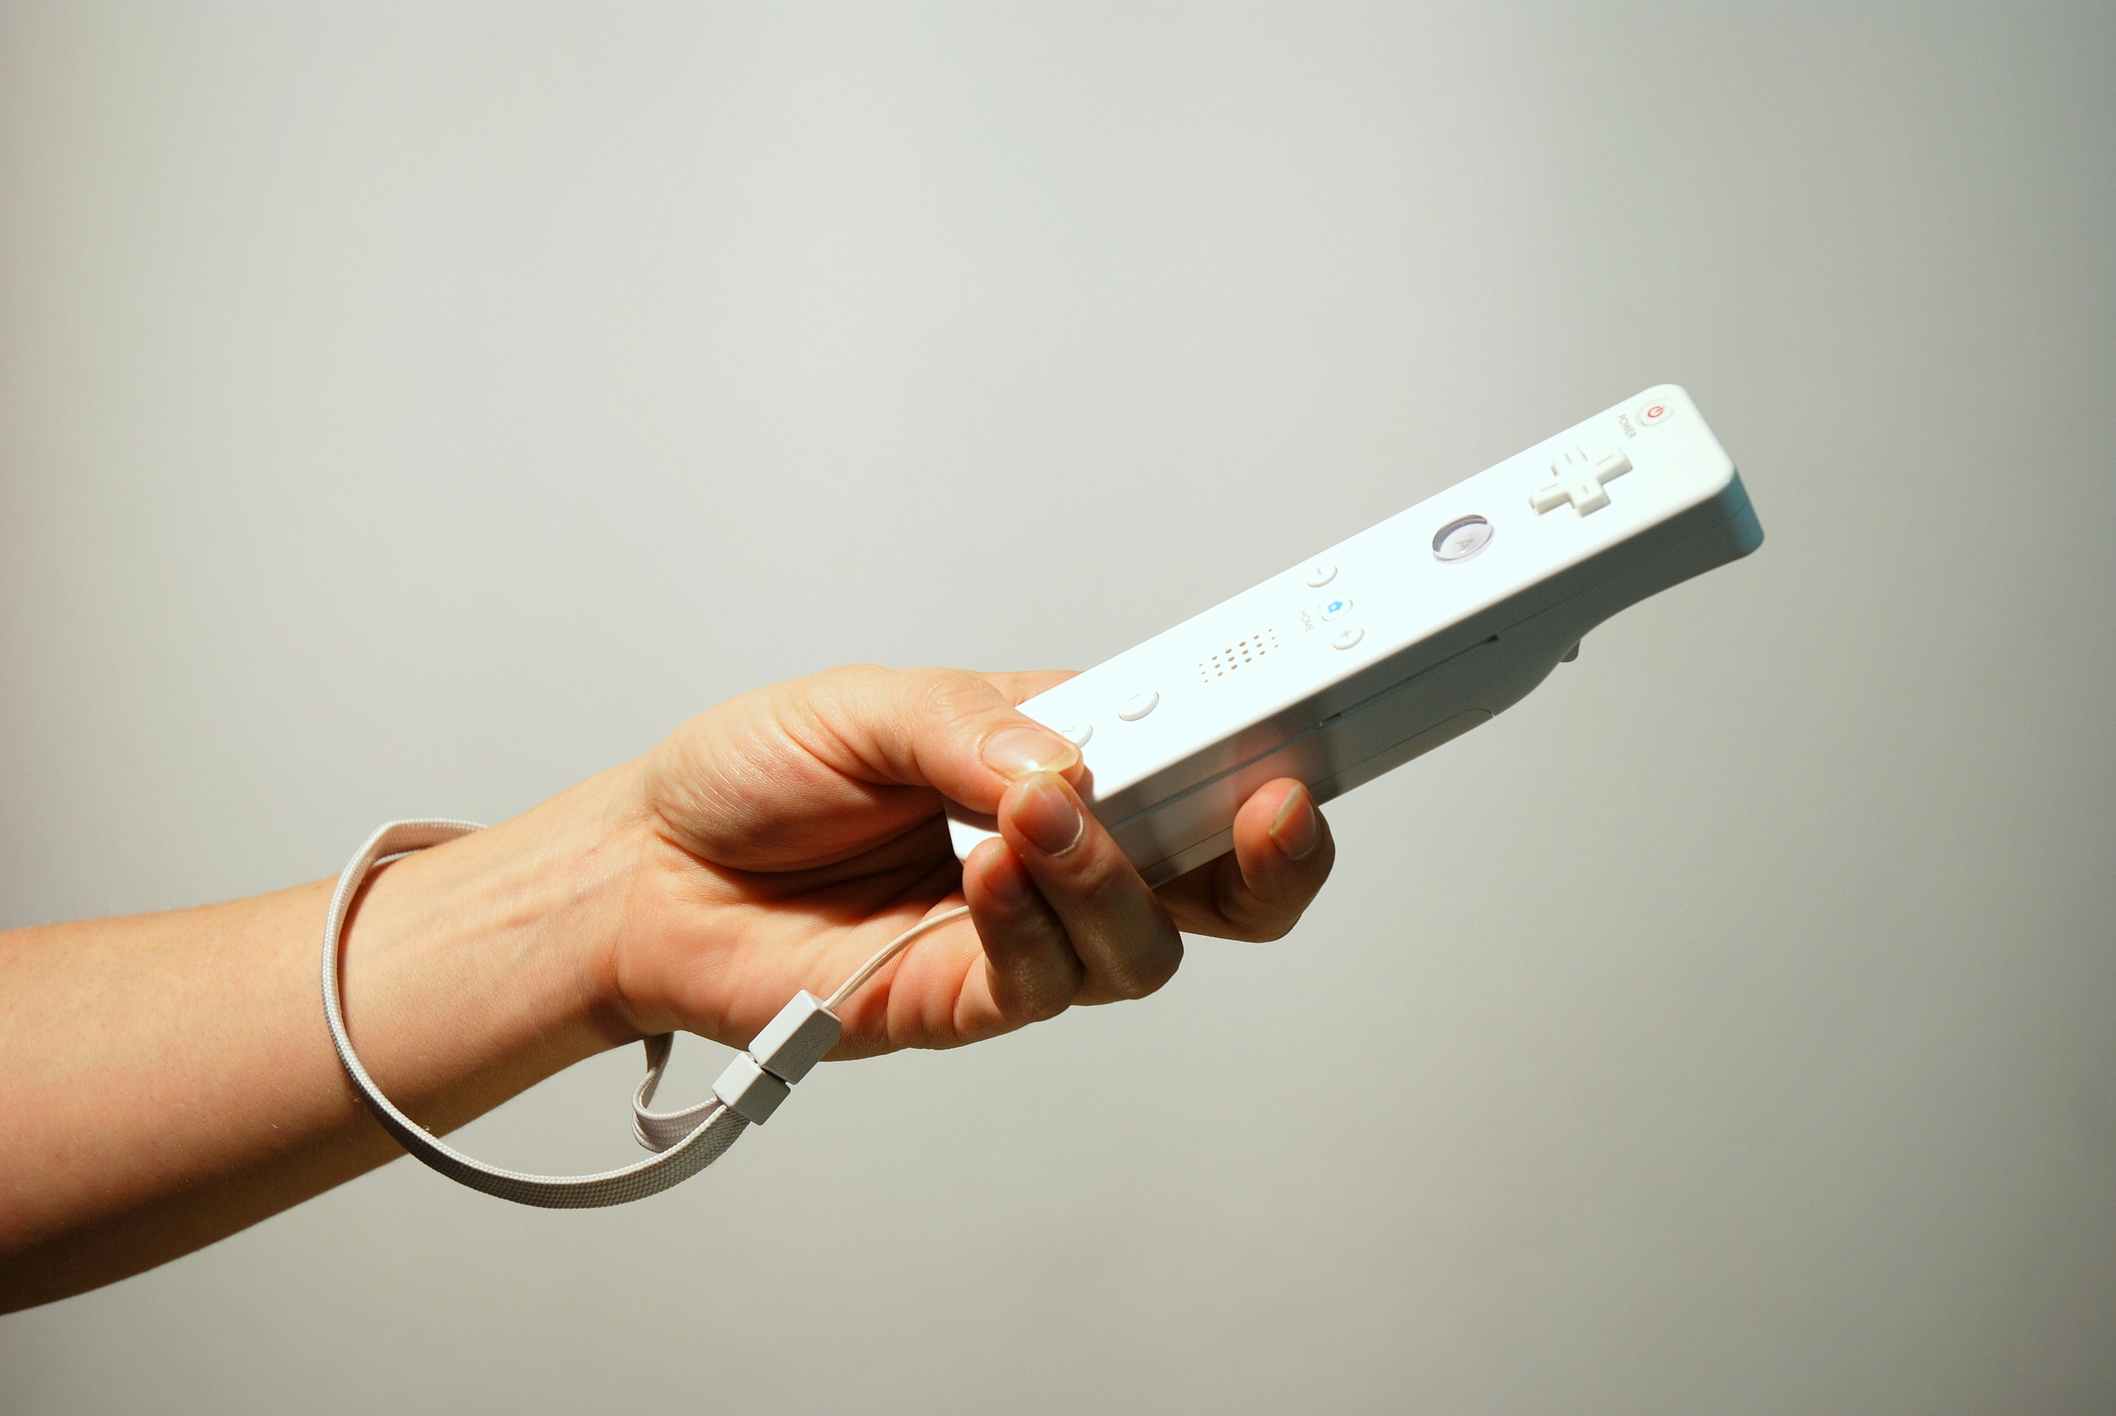 Wii remote being held 2020